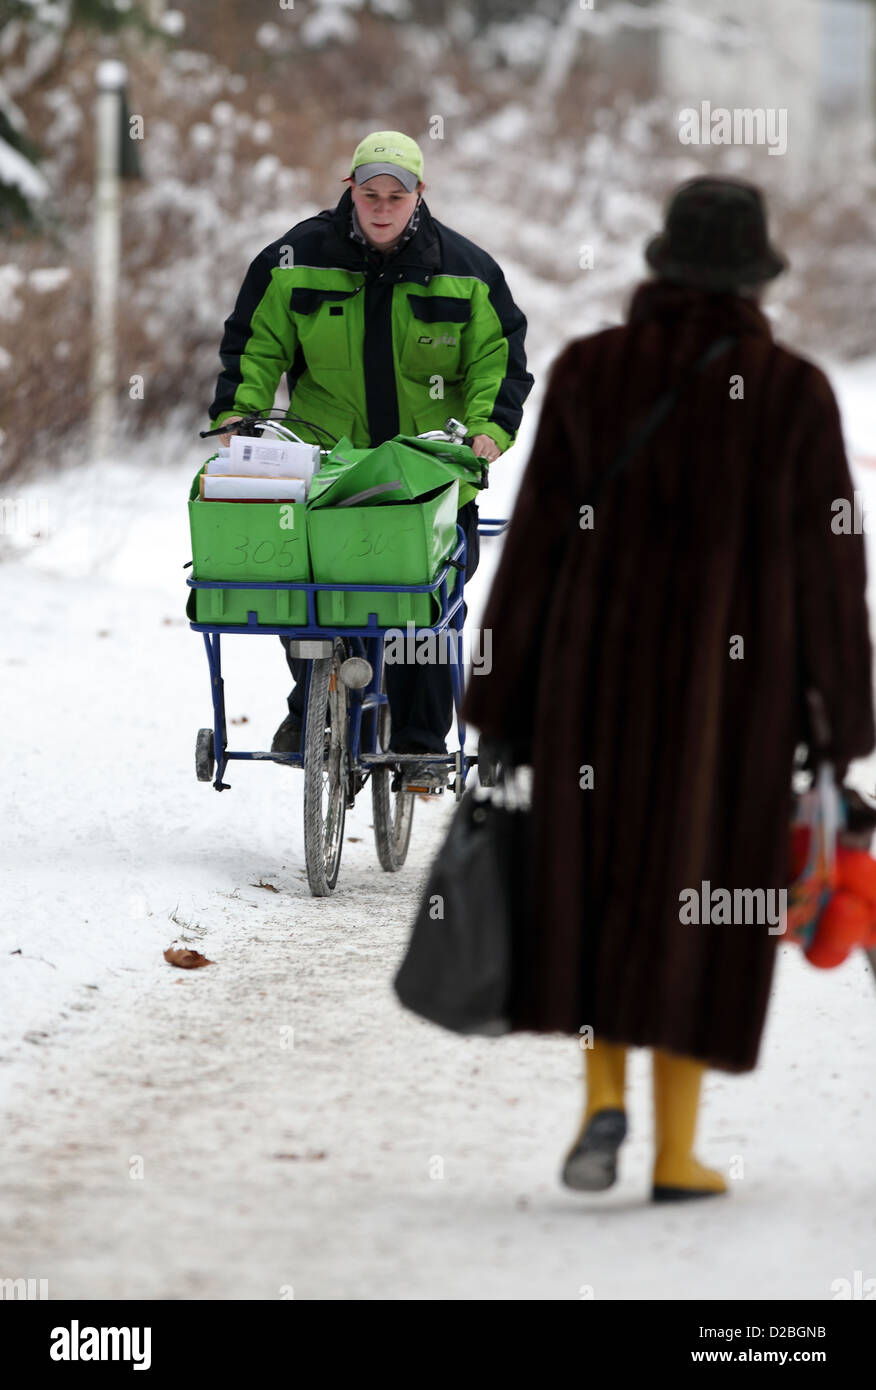 Berlin, Germany, the postman PIN AG is proceeding bike along a snowy sidewalk Stock Photo